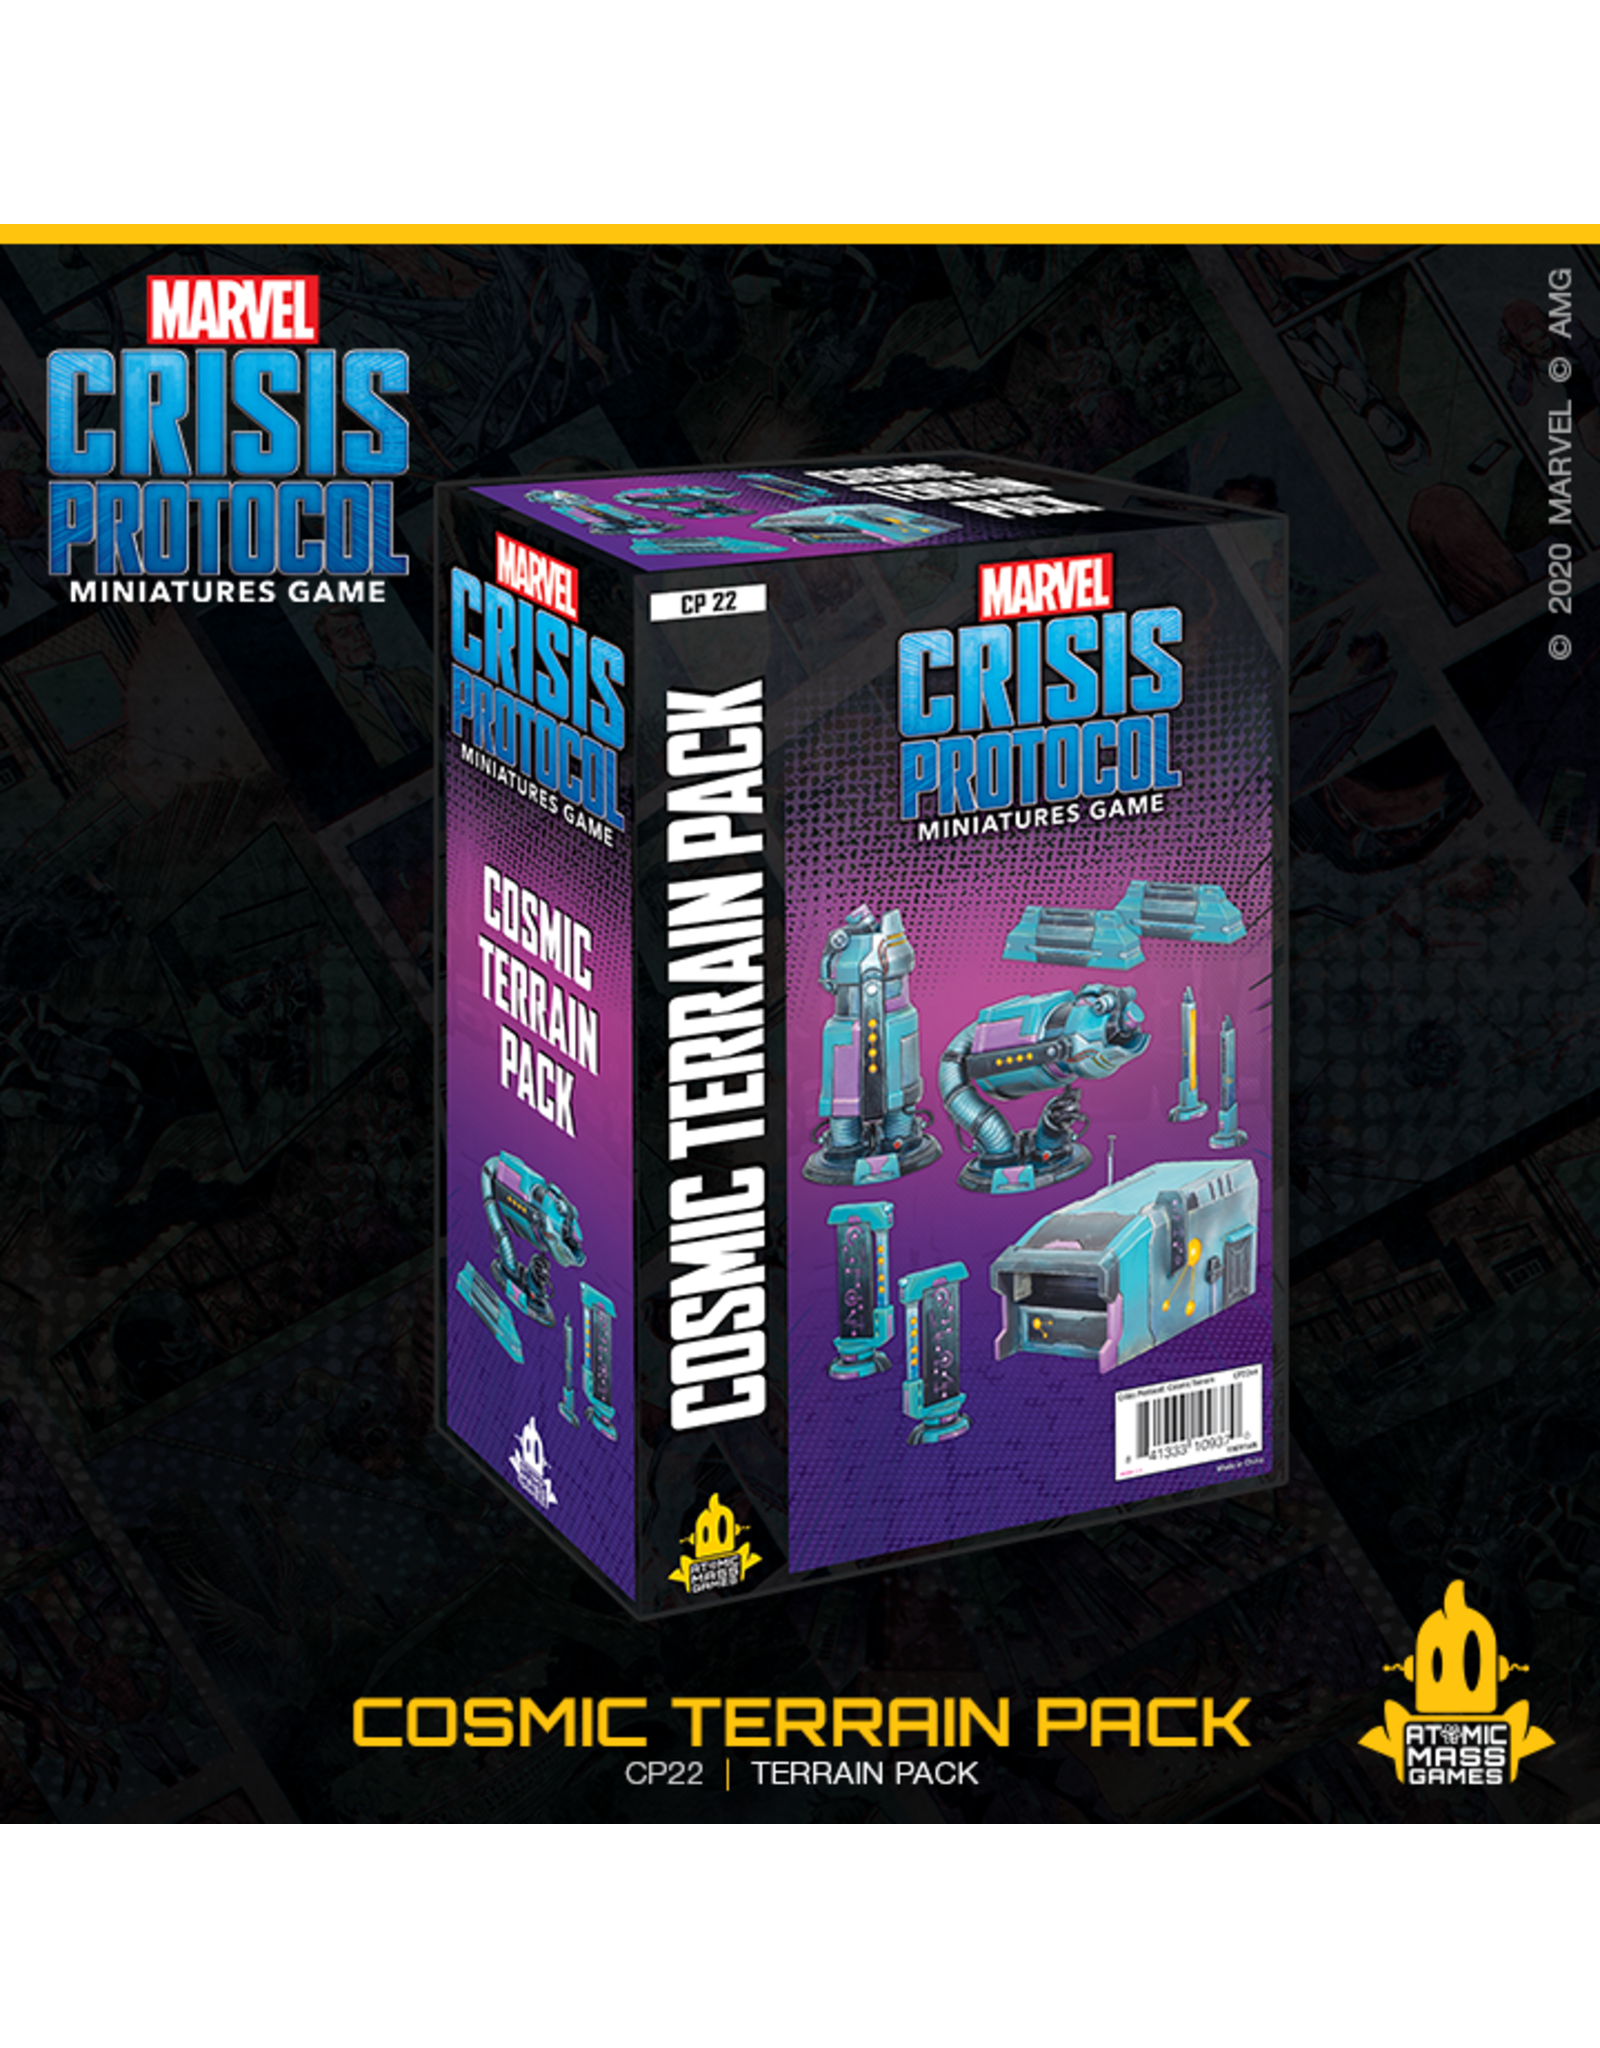 ATOMIC MASS GAMES CP22 Cosmic Terrain Pack